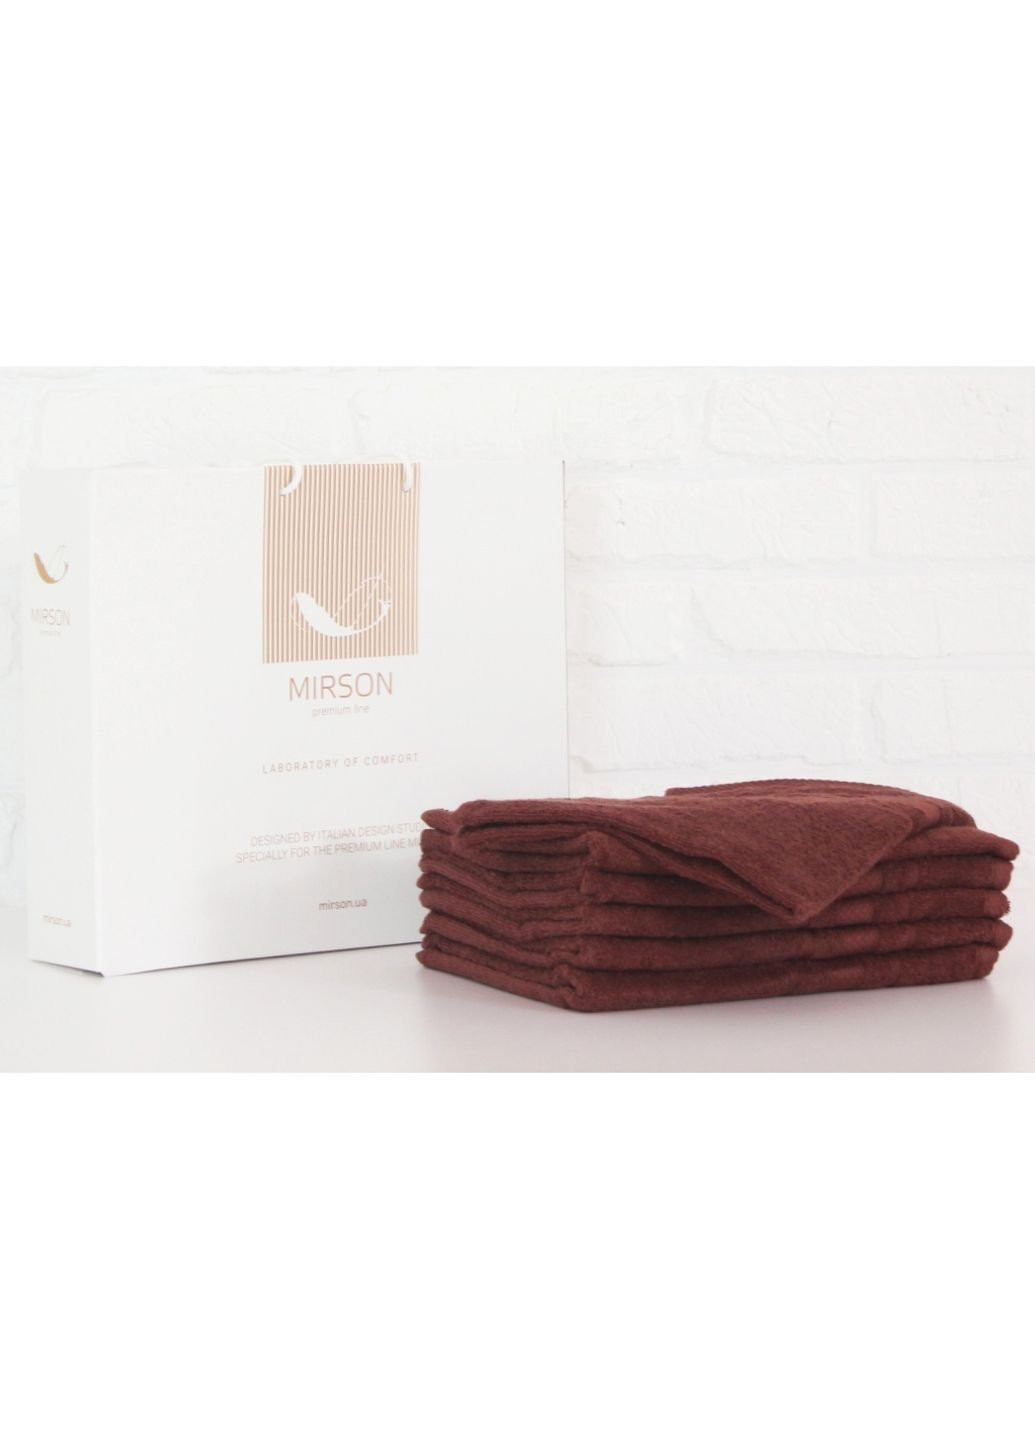 No Brand полотенце mirson набор банный №5071 elite softness brown 50х90 6 шт (2200003523959) коричневый производство - Украина